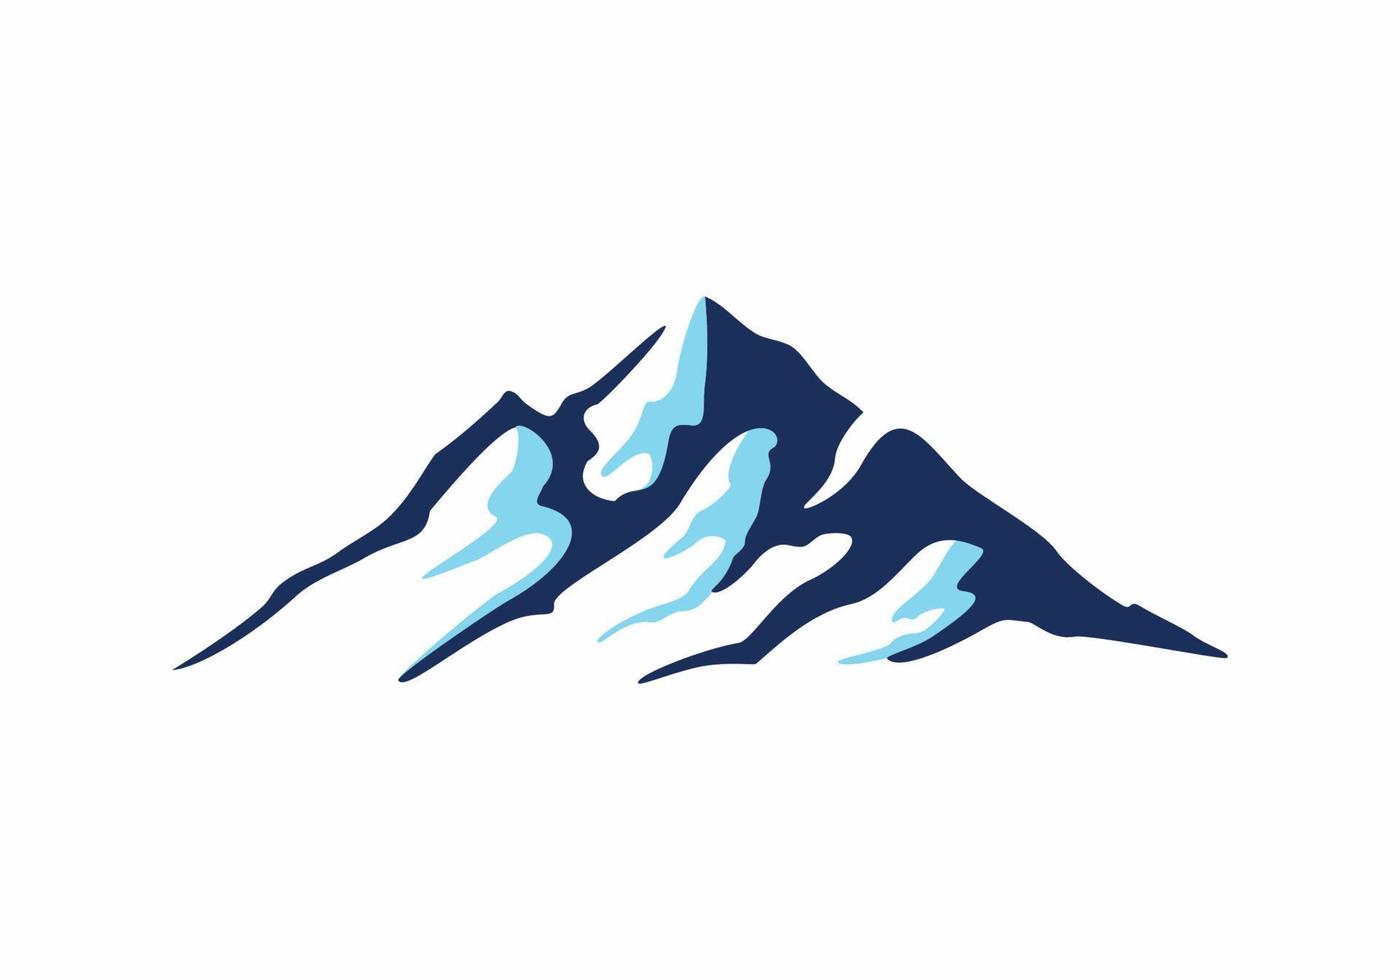 Iceberg logo synbol illustration isolated on white background vector